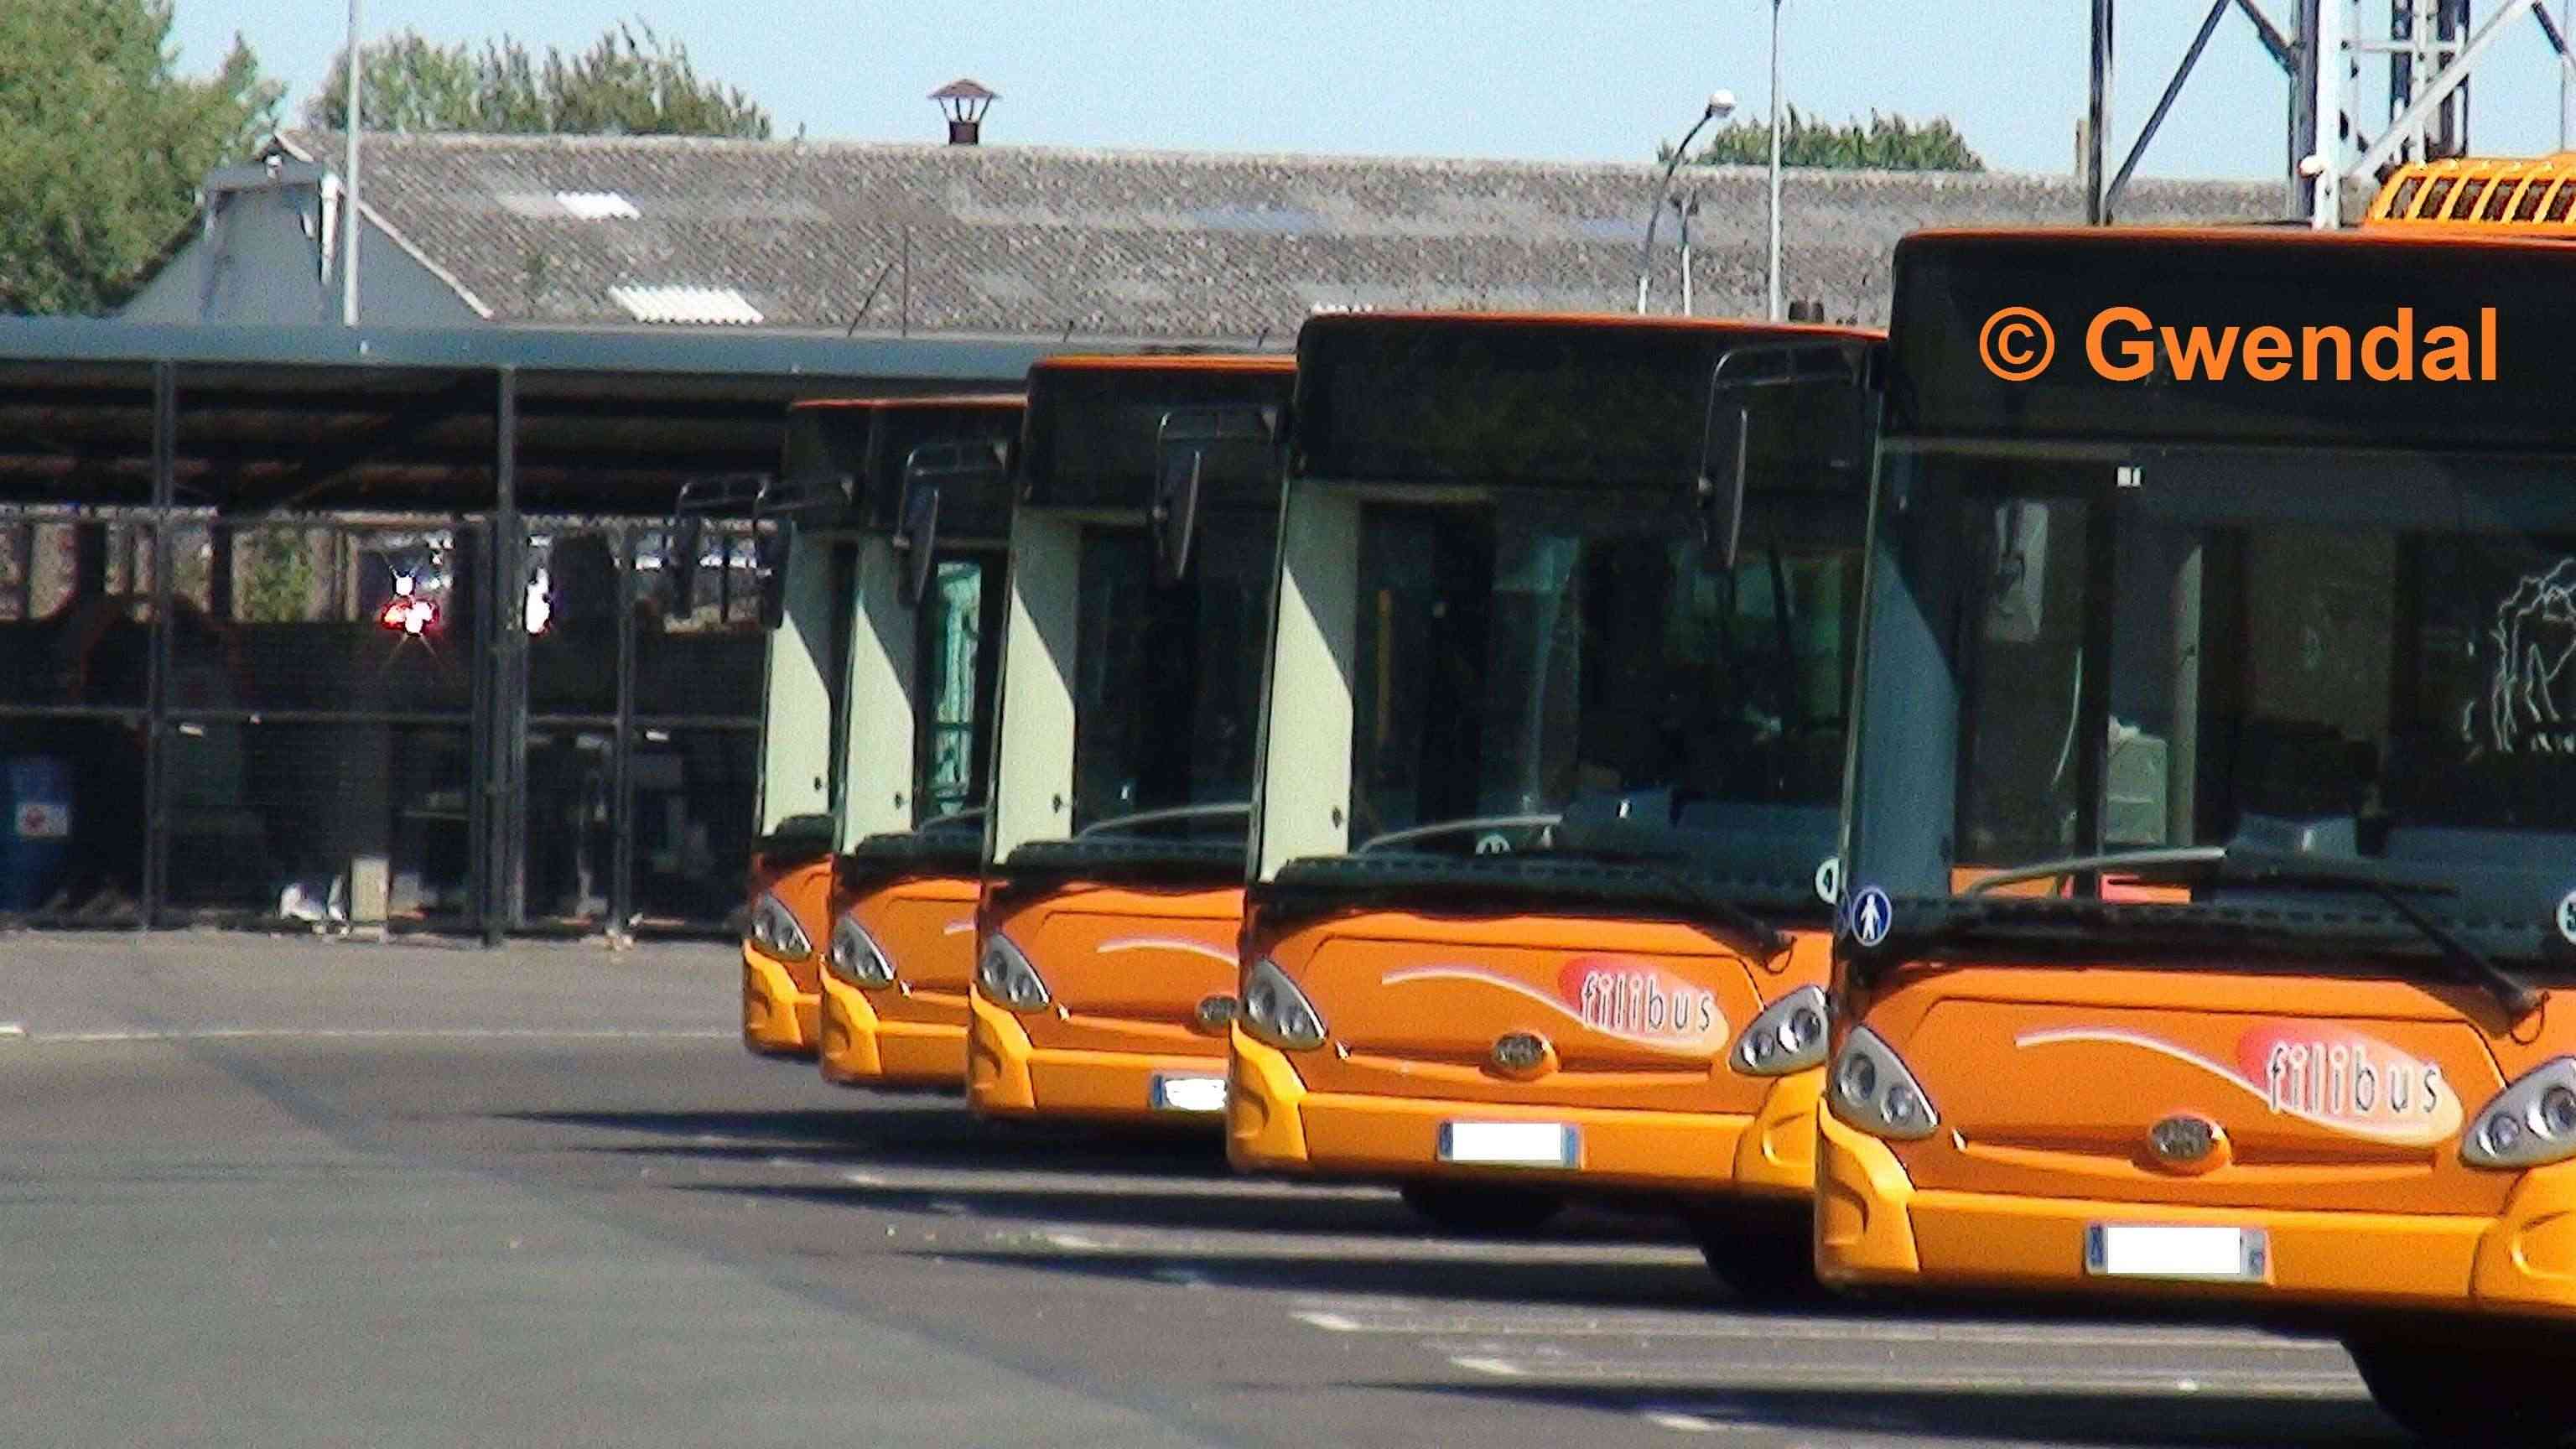 Heuliez Bus